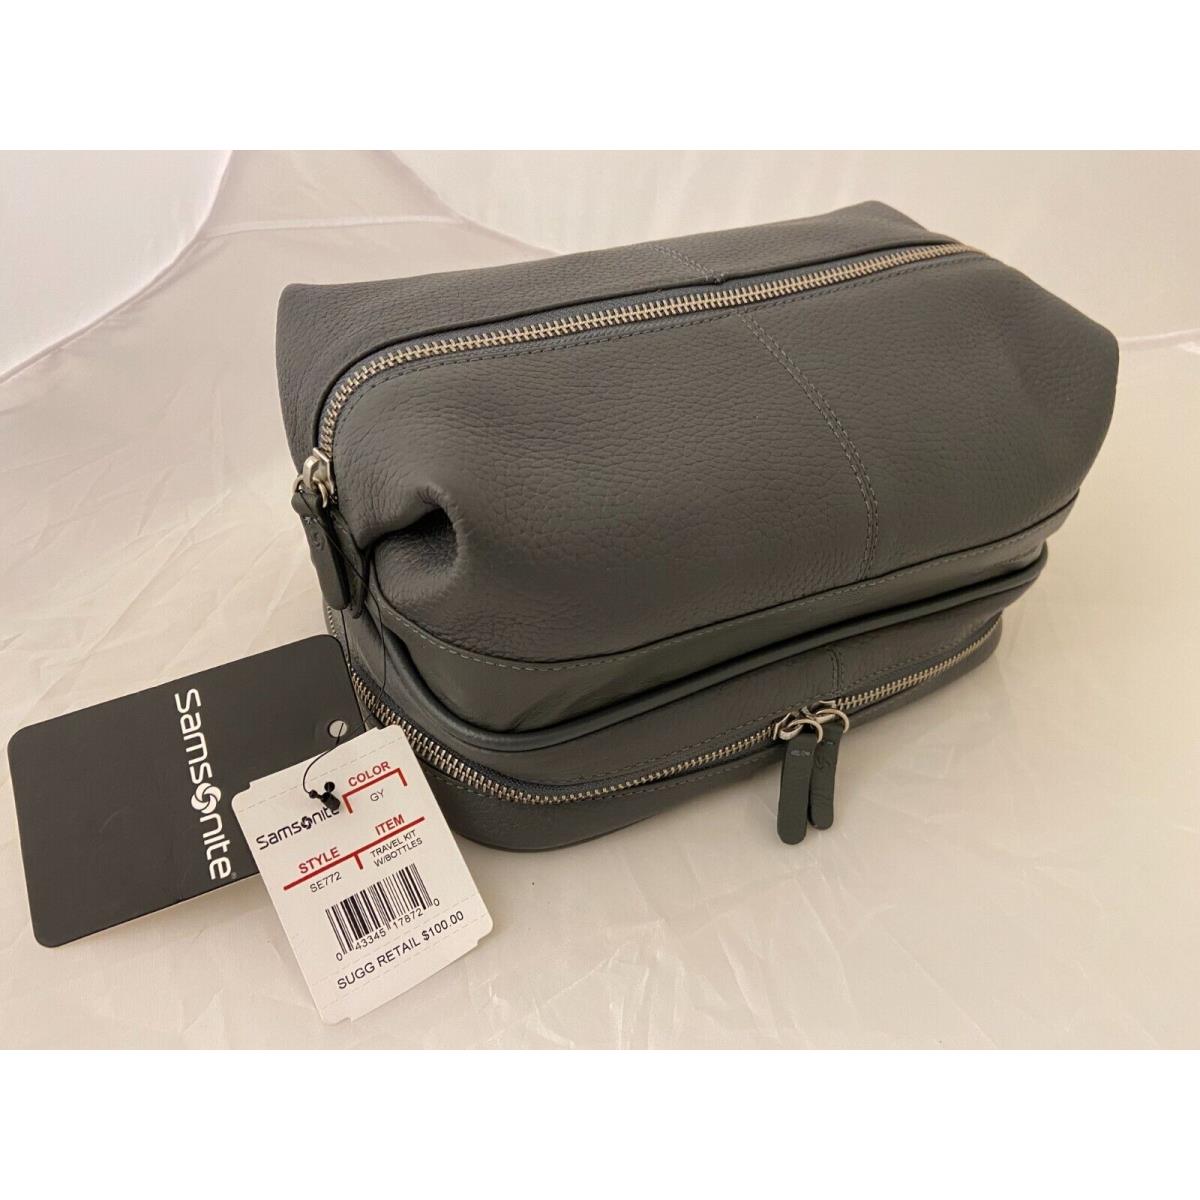 Samsonite Classic Leather Zip Bottom Travel Kit. Grey. New